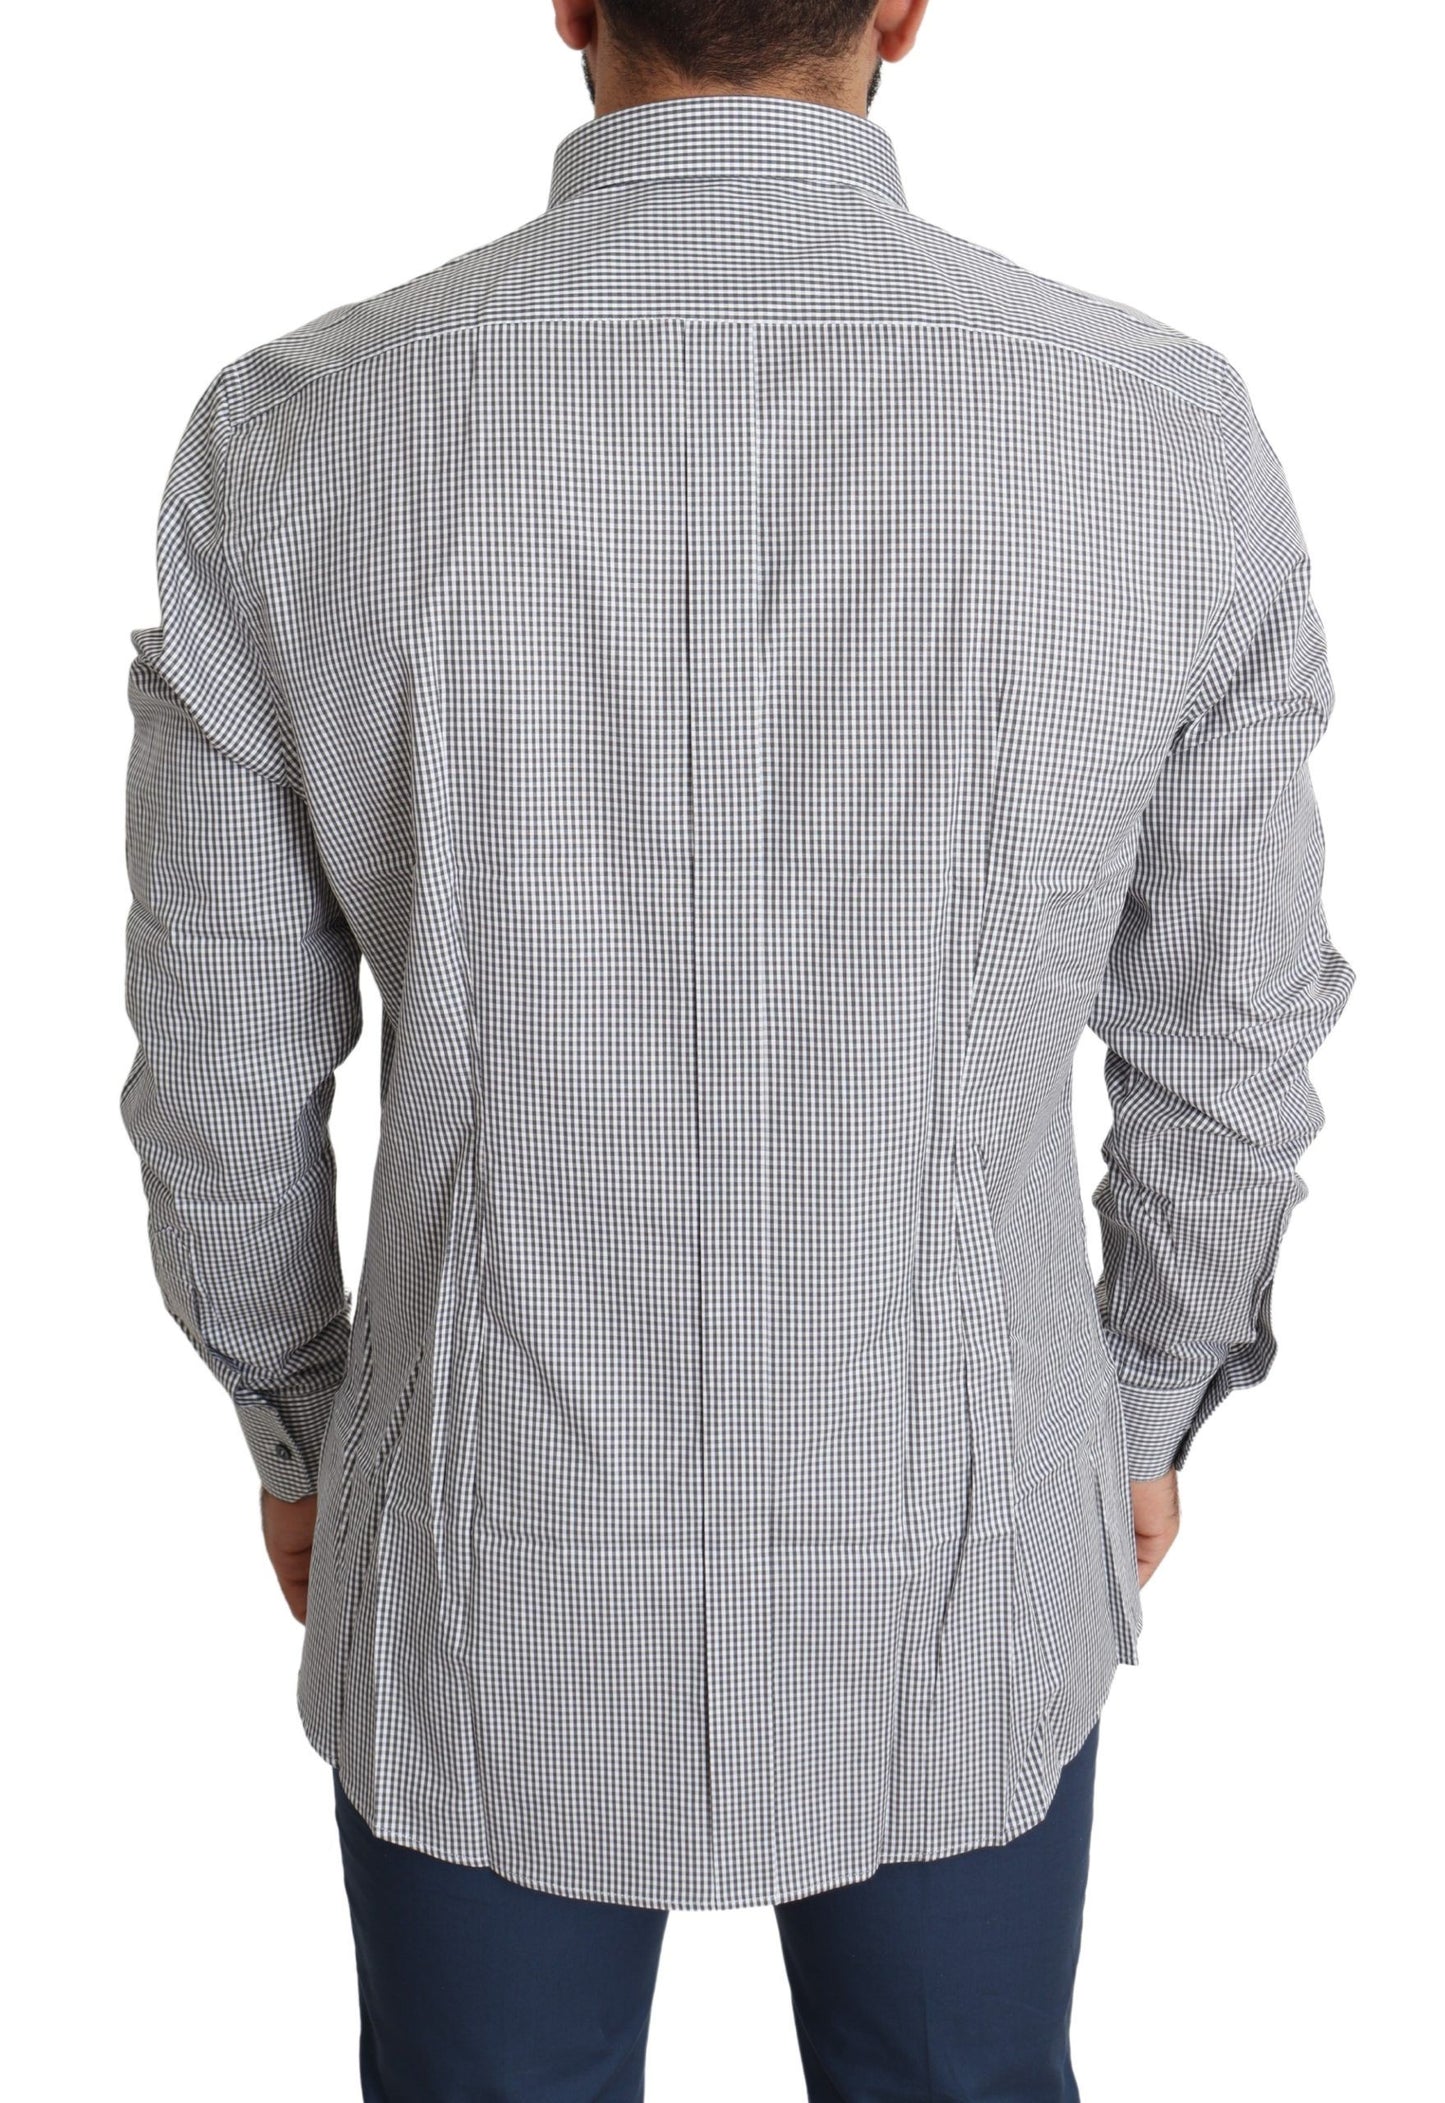 Checkered Slim Fit Cotton Dress Shirt